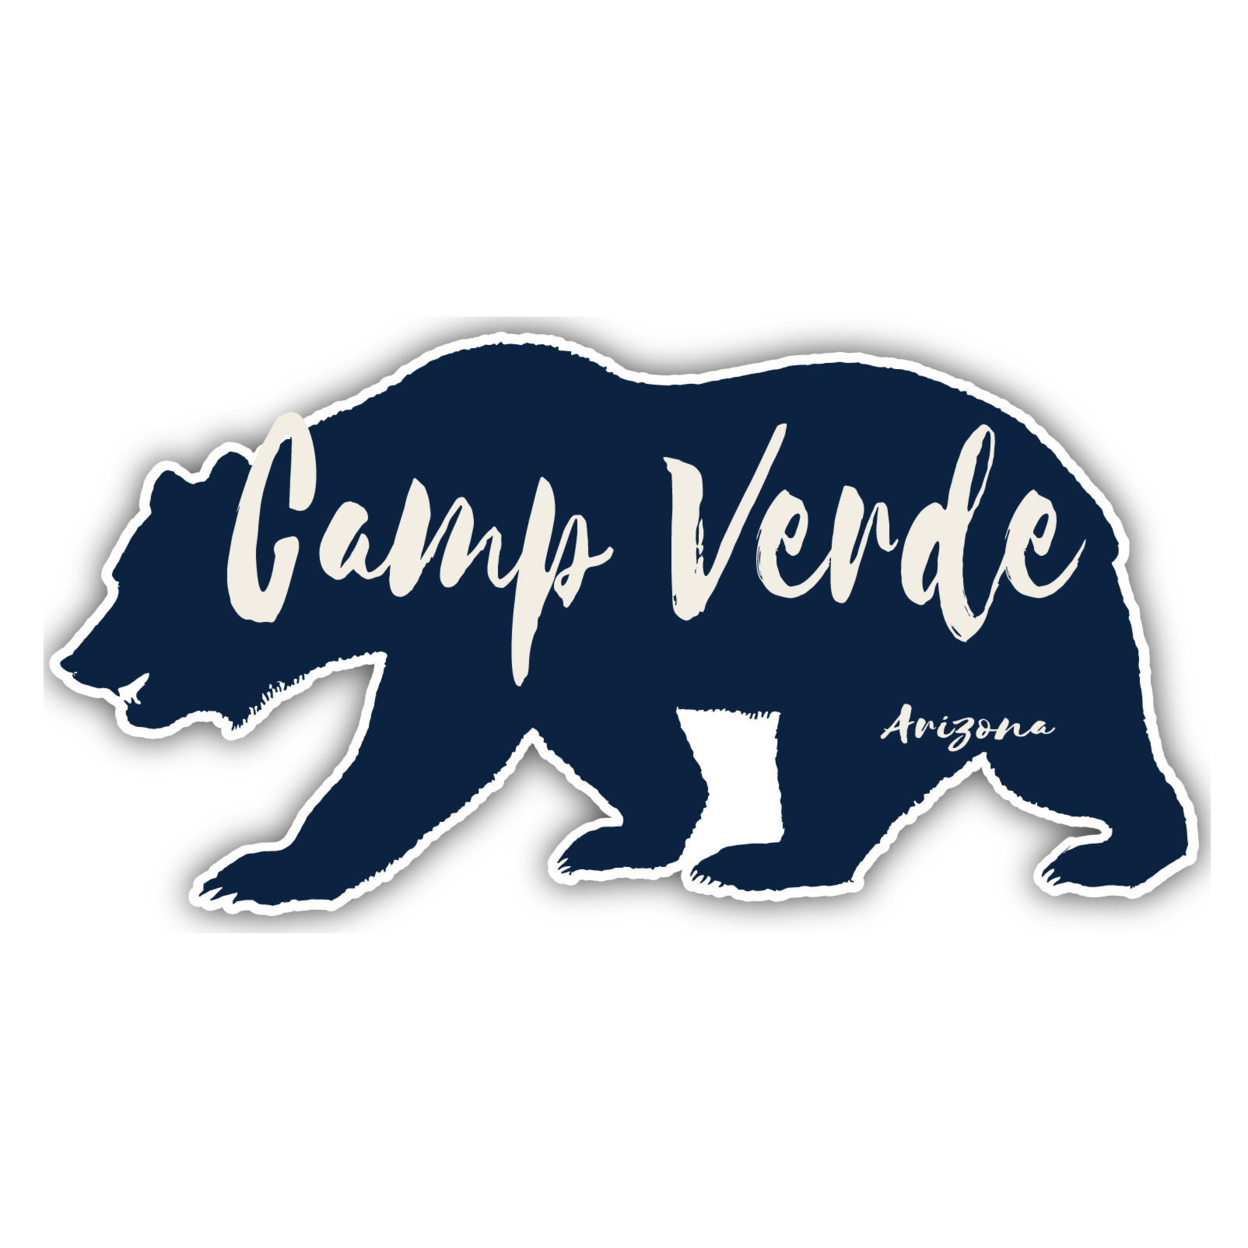 Camp Verde Arizona Souvenir Decorative Stickers (Choose Theme And Size) - Single Unit, 6-Inch, Tent